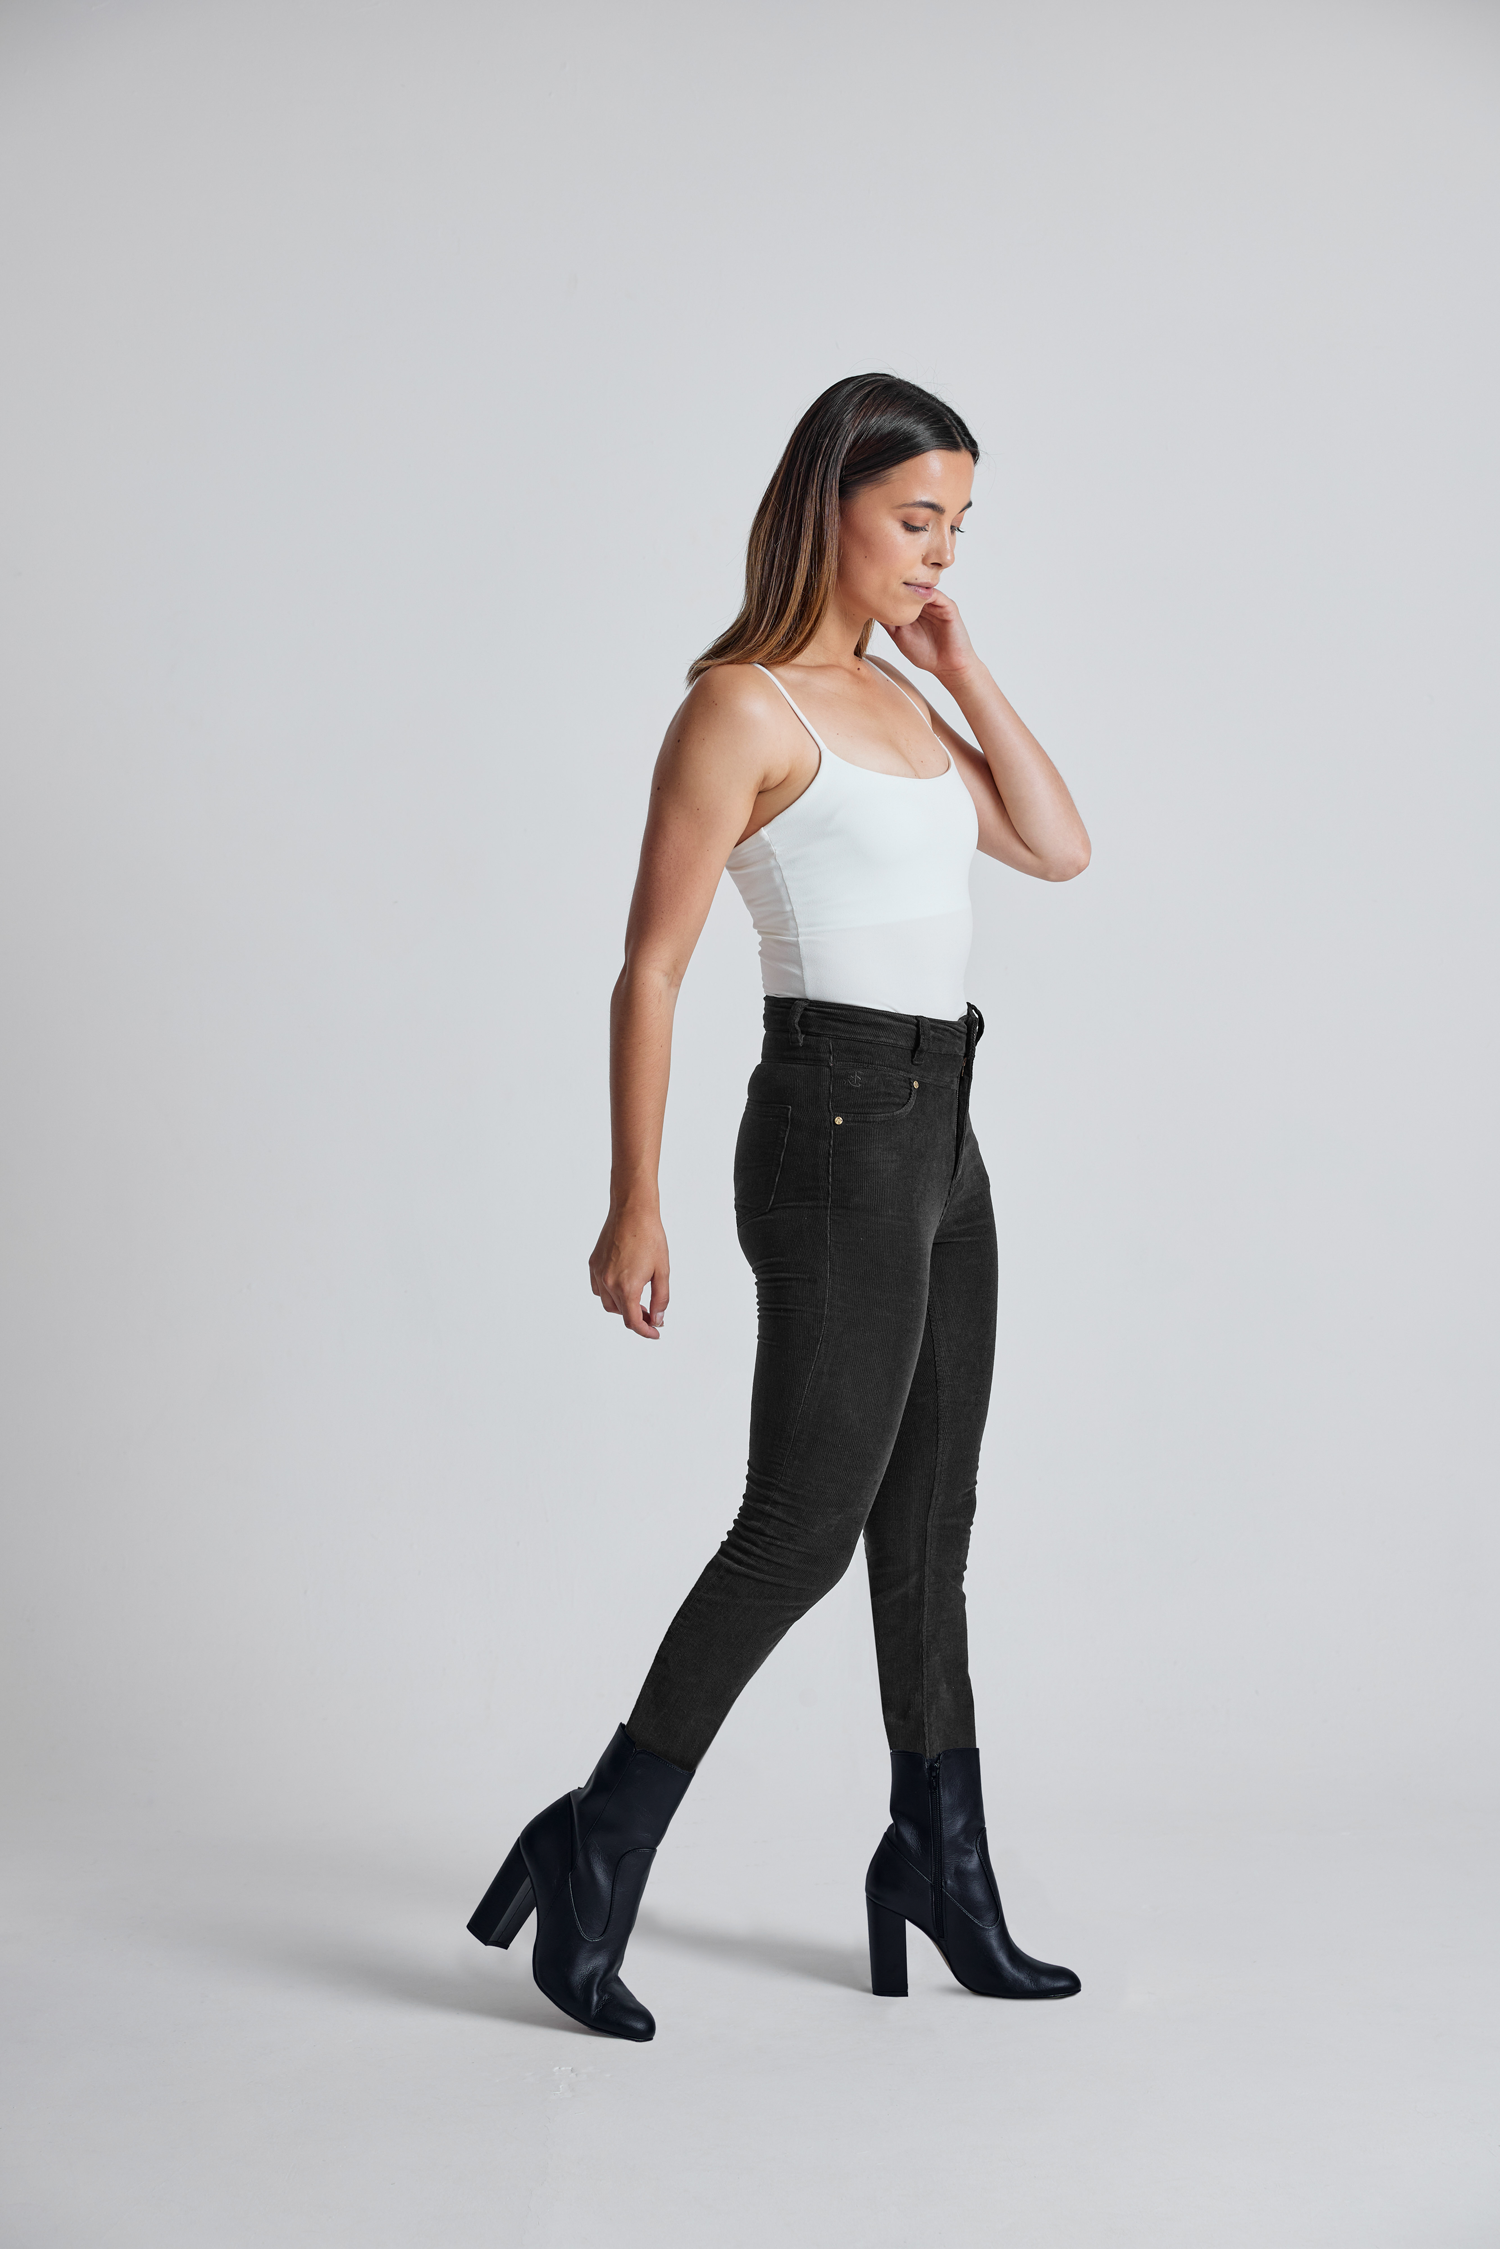 NINA Black - Organic Cotton Cord High Waist Skinny Jean by Flax & Loom